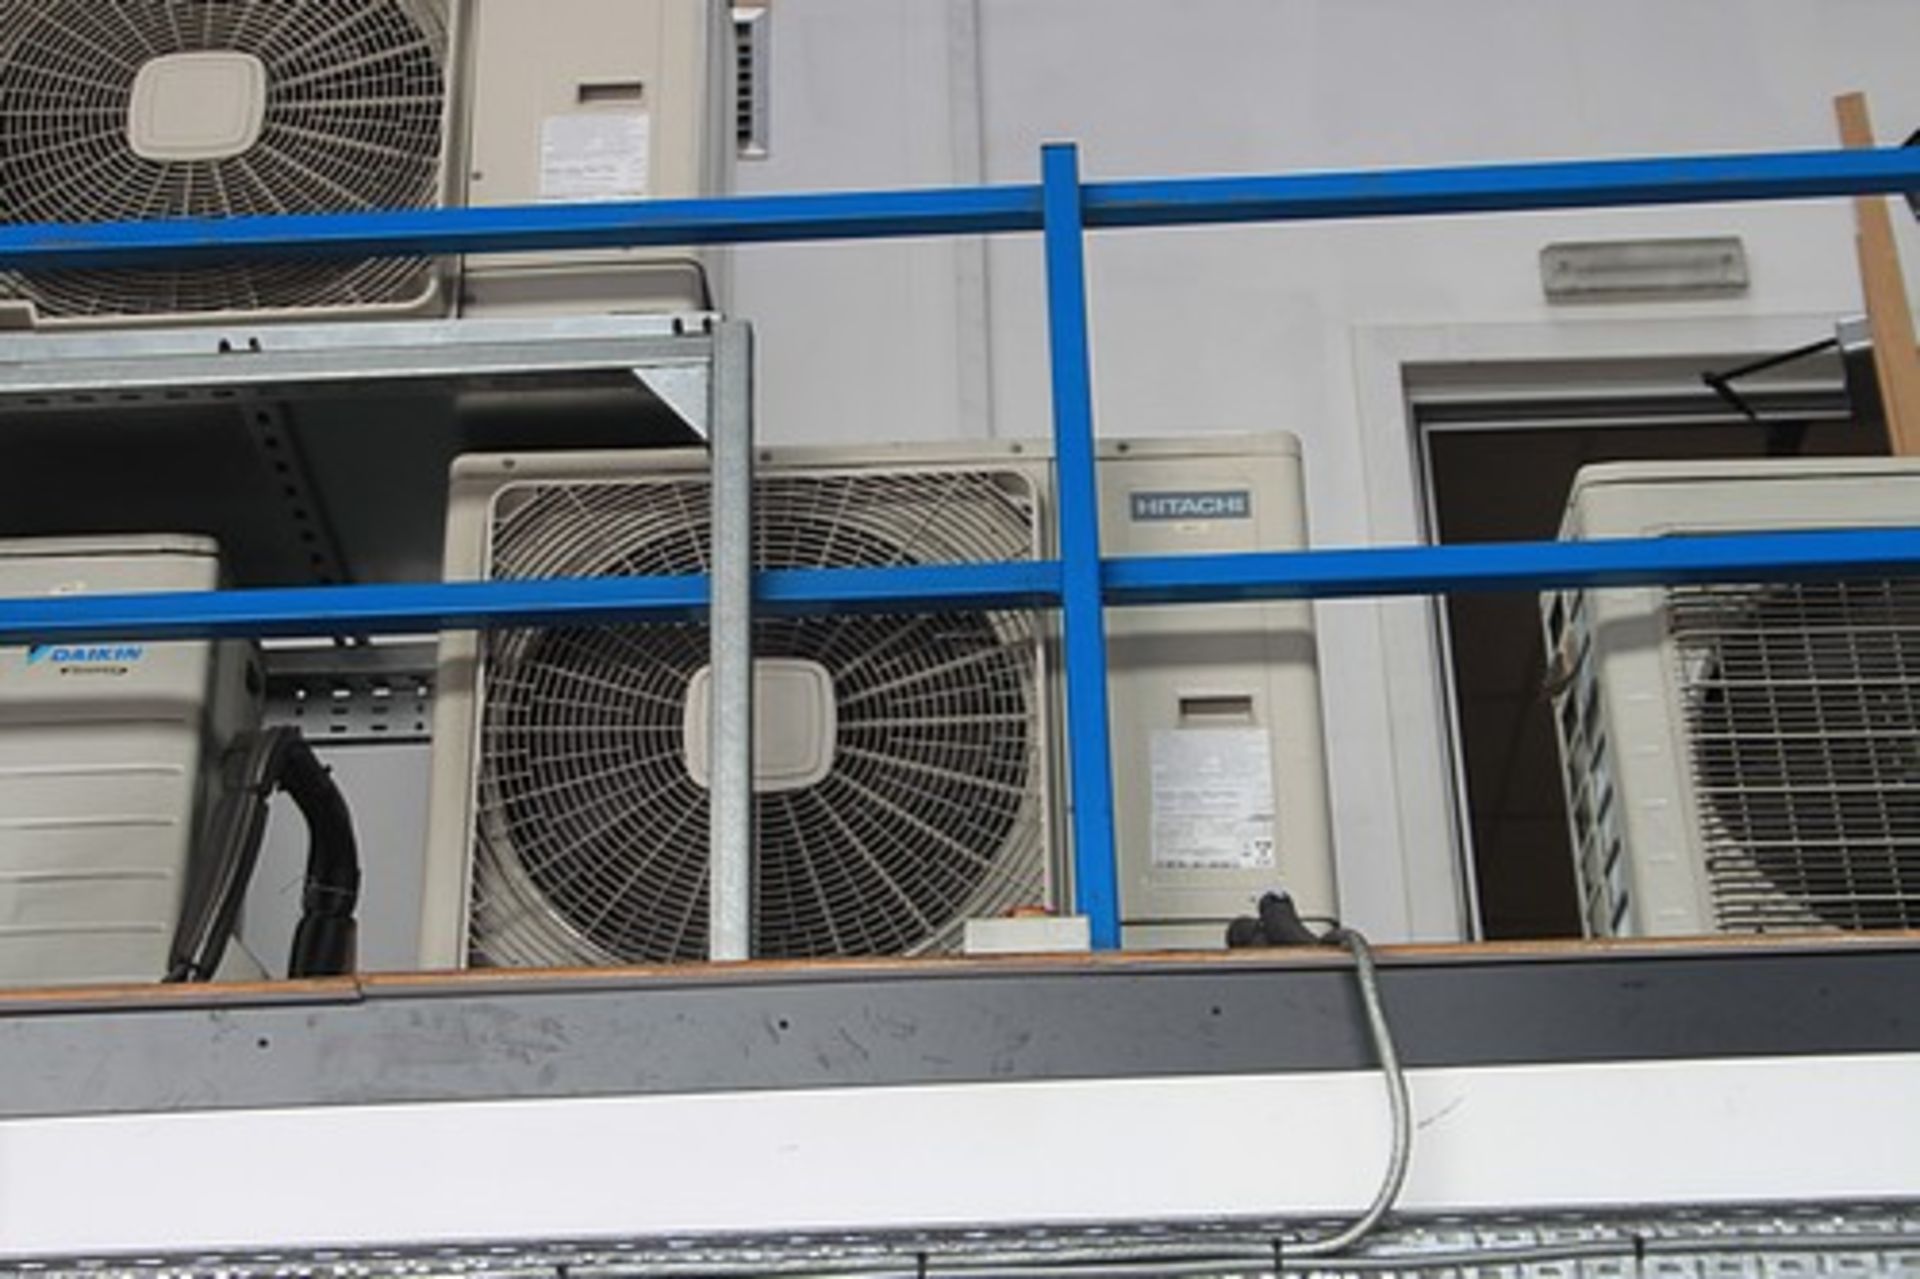 Hitachi RAS-4HVRNS2EMono split air conditioning unit with outside unit dimensions 950 x 370 x